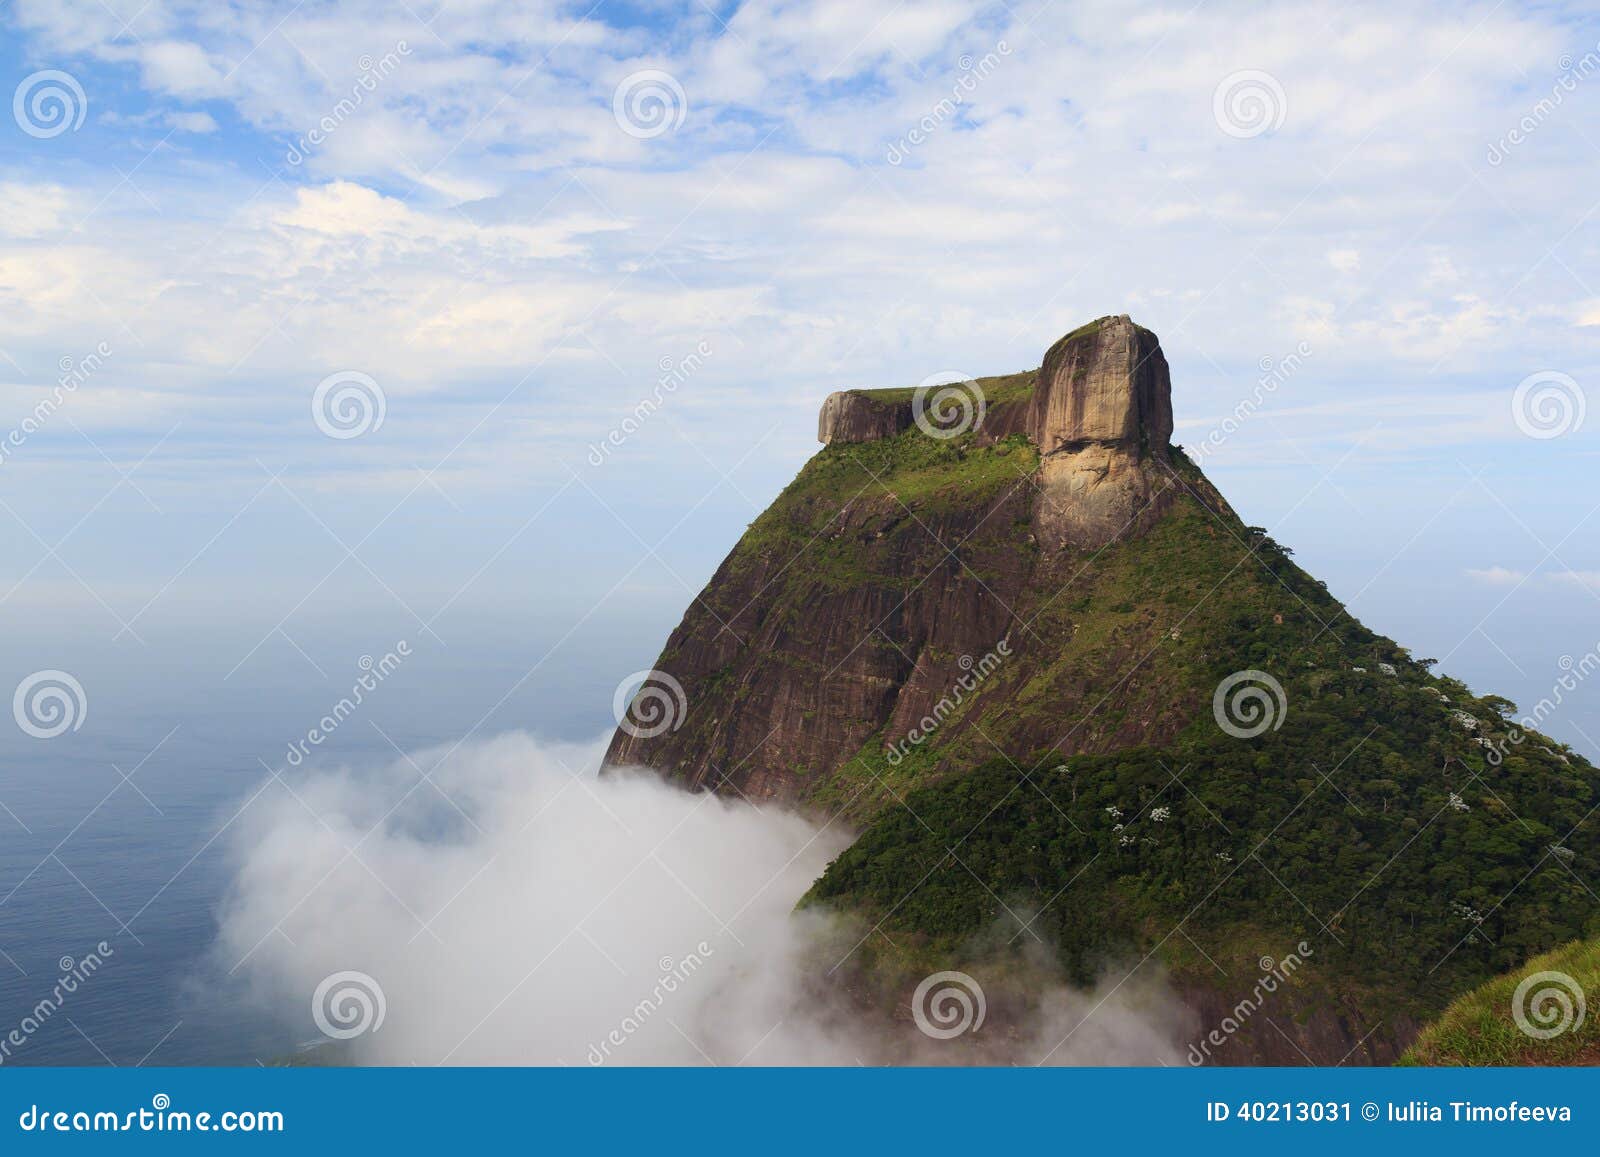 mountain pedra da gÃÂ¡vea in clouds, rio de janeiro